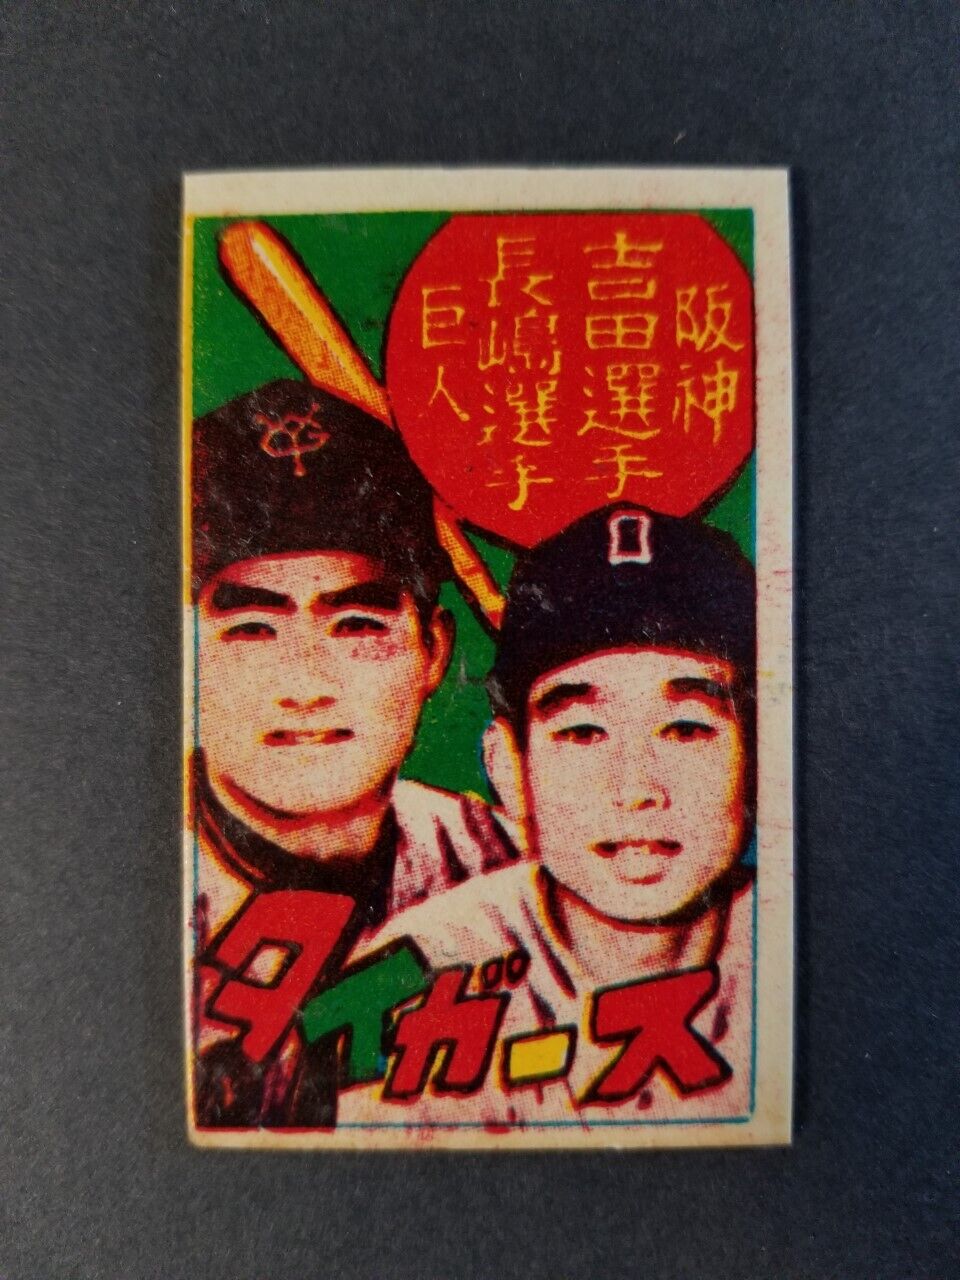 1958 Mitsuwa SHIGEO NAGASHIMA rookie / YOSHIDA menko card (Japanese Baseball). rookie card picture